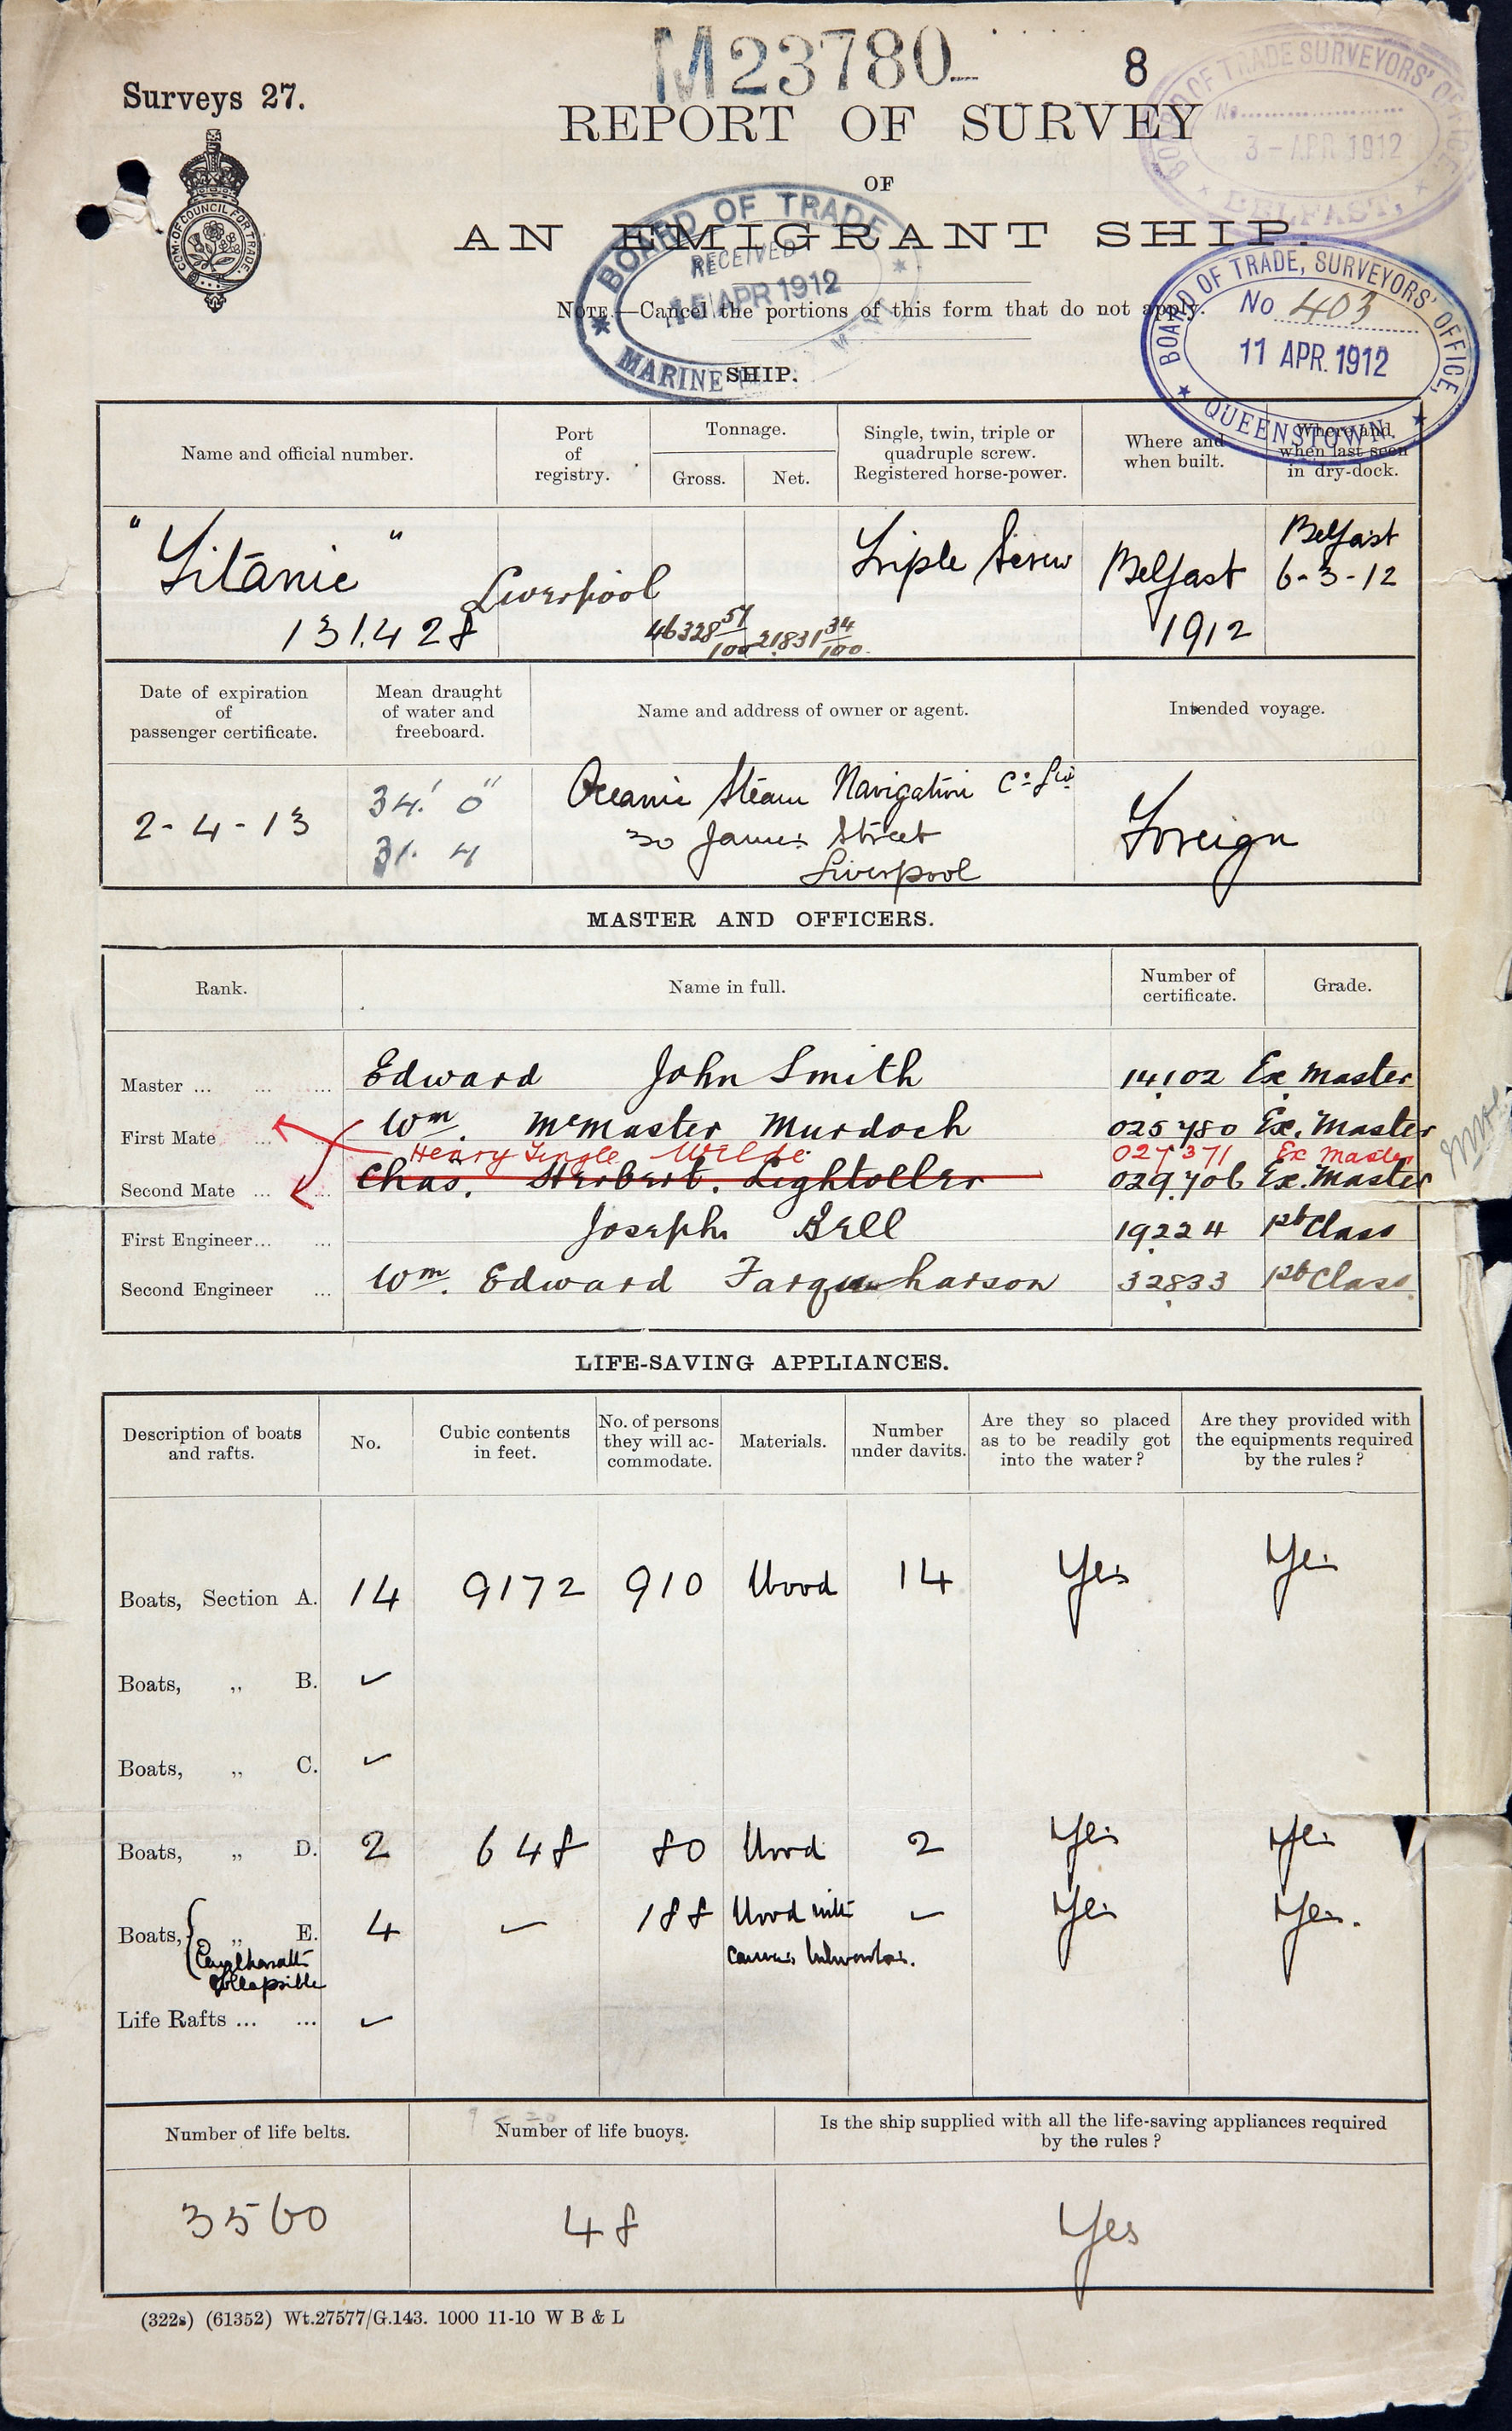 MT9/920F(8) Report of Survey for RMS Titanic, p1, April 1912